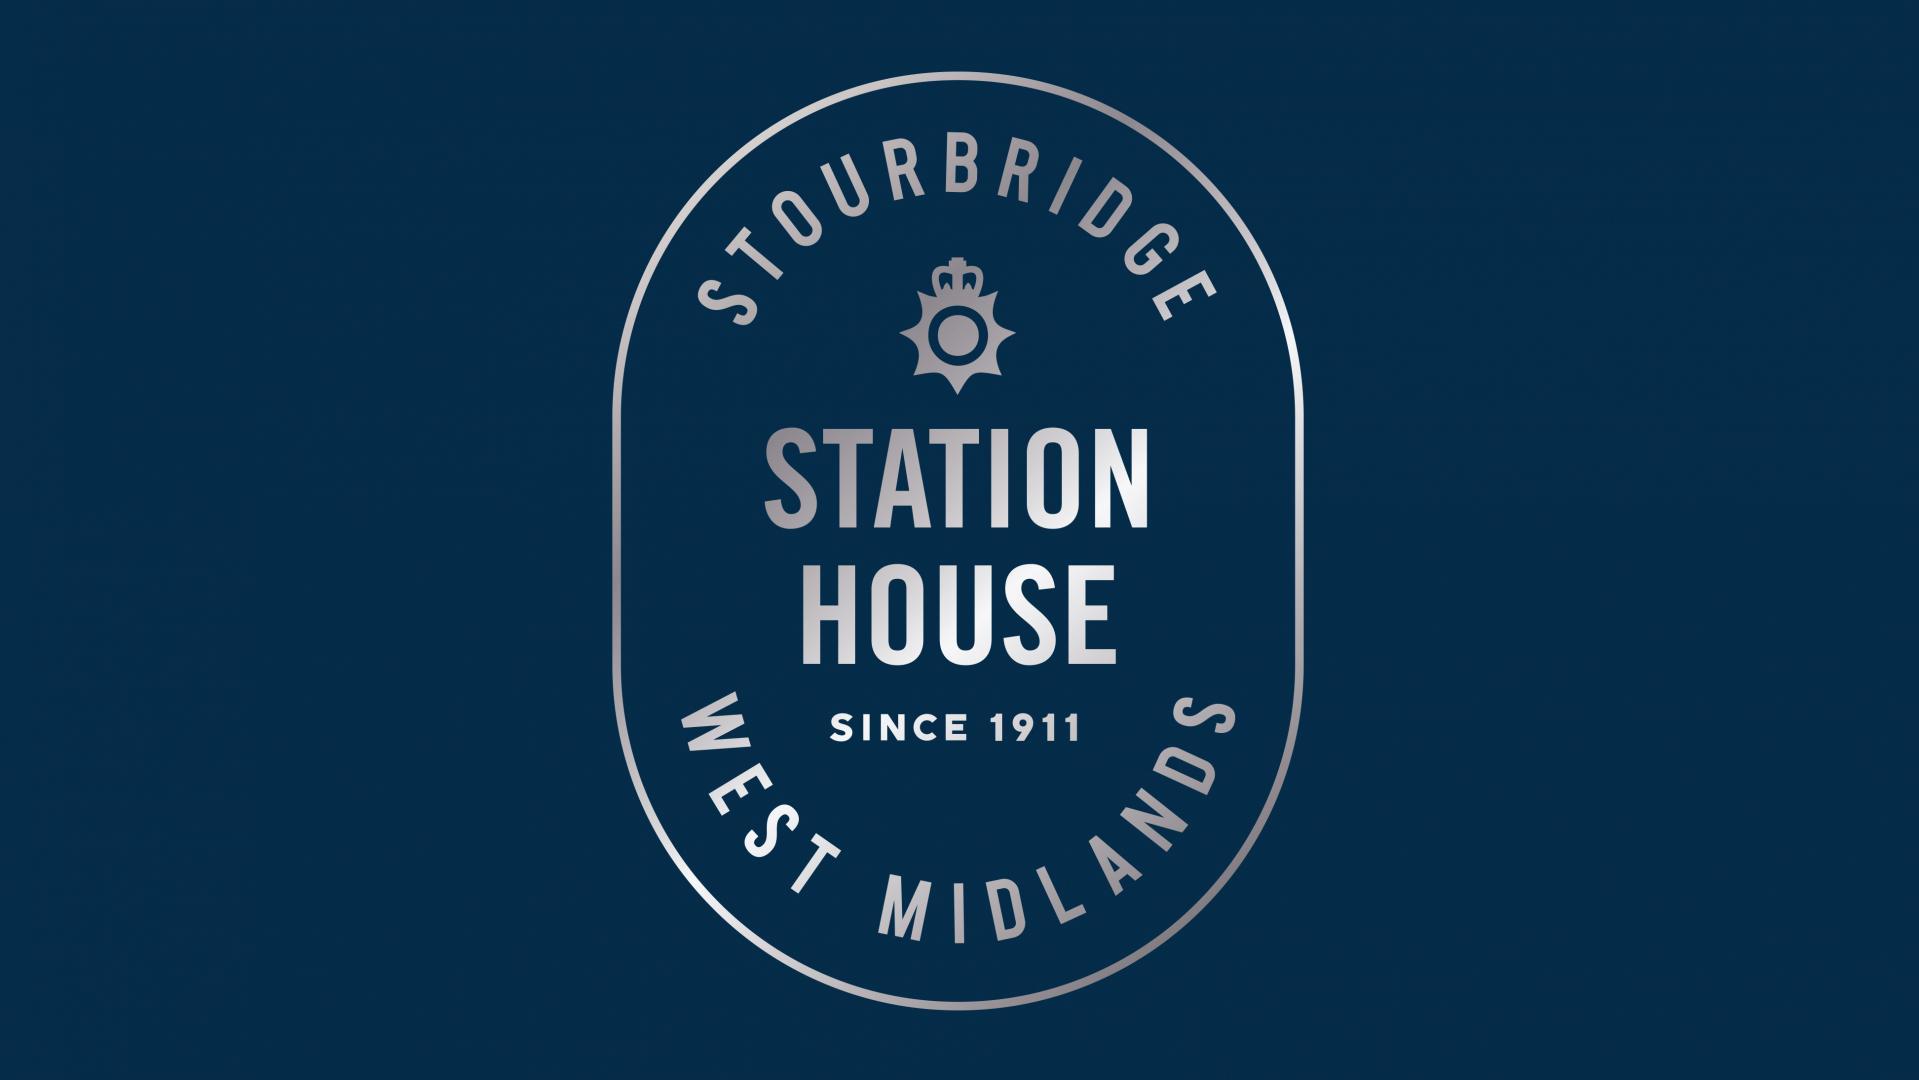 The Station House, New Road, Stourbridge